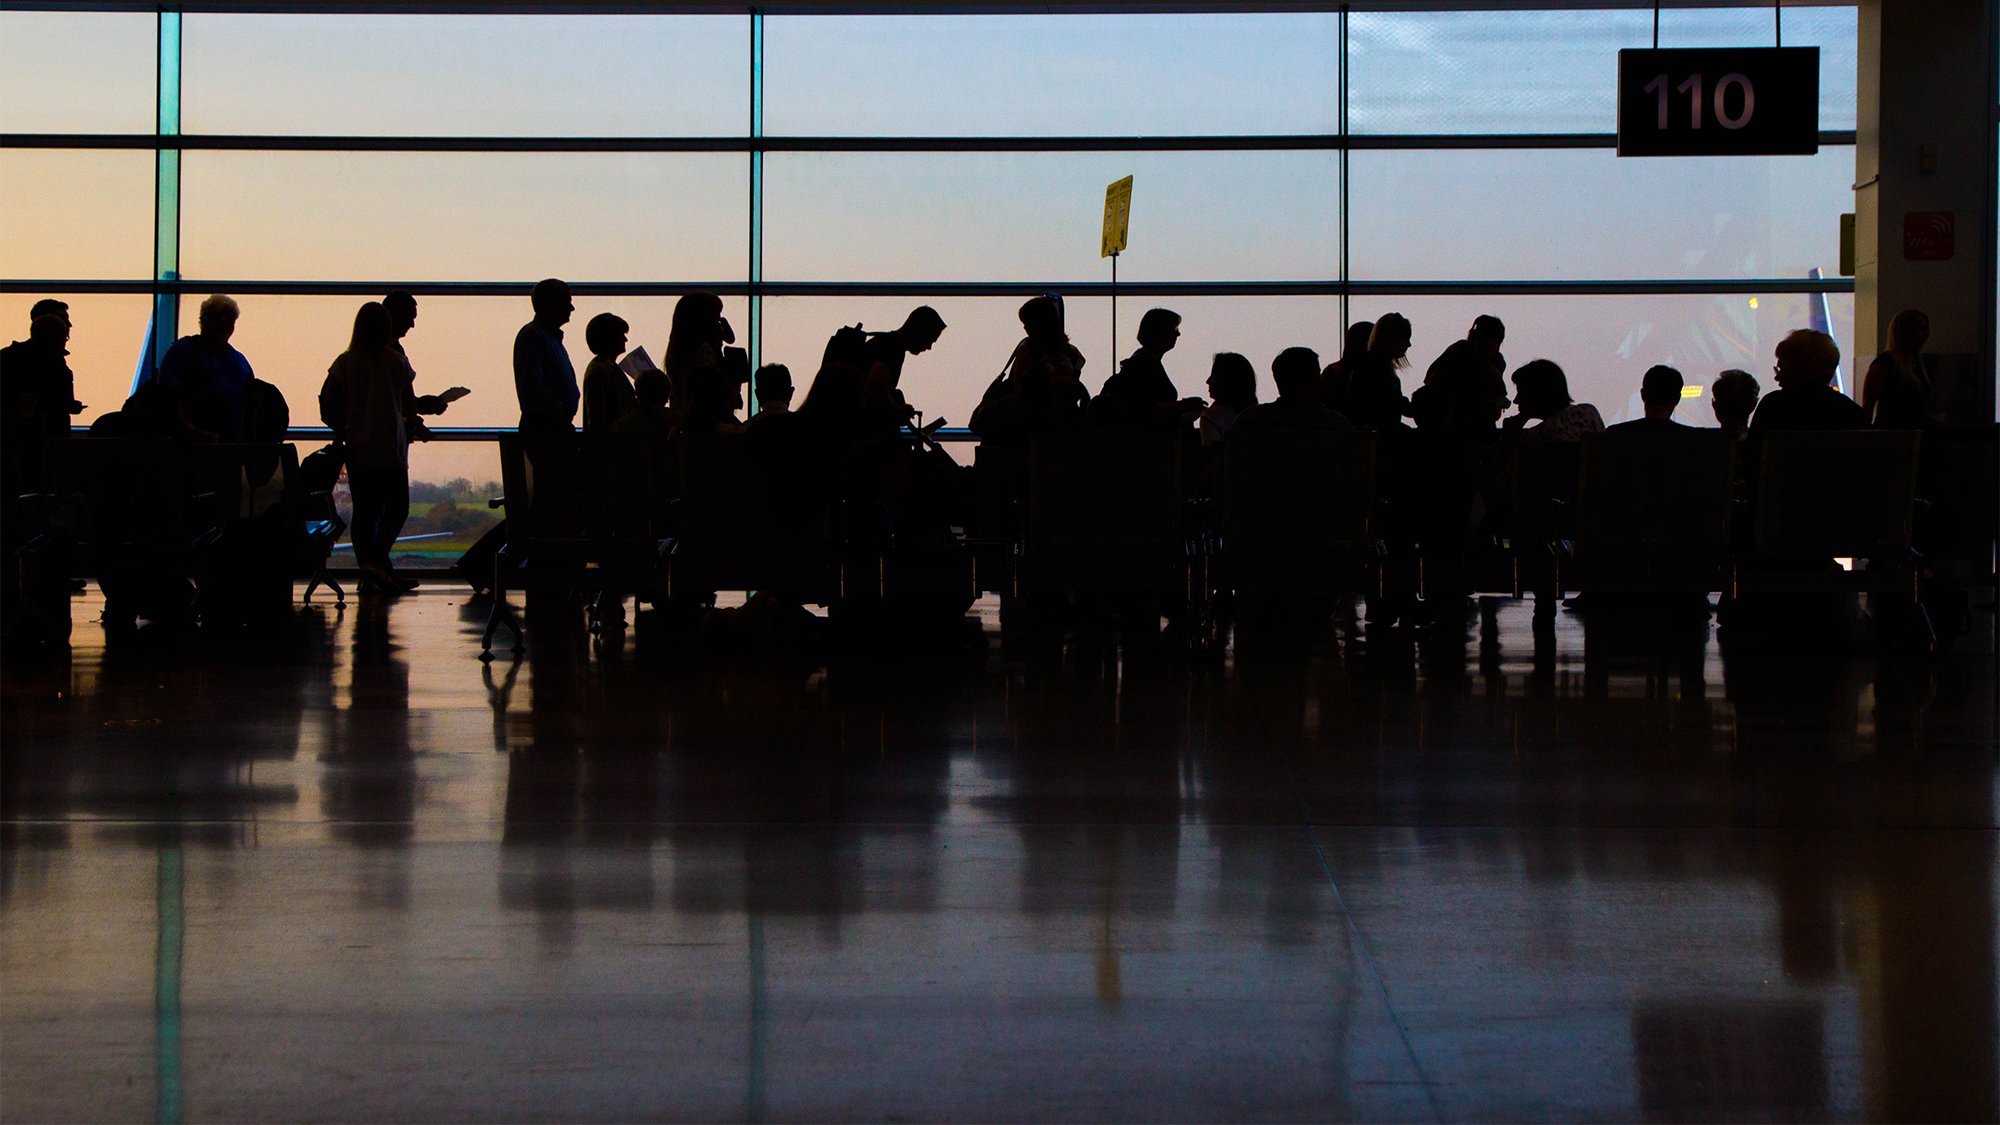 Passengers queuing at Dublin Airport. Image: Shutterstock